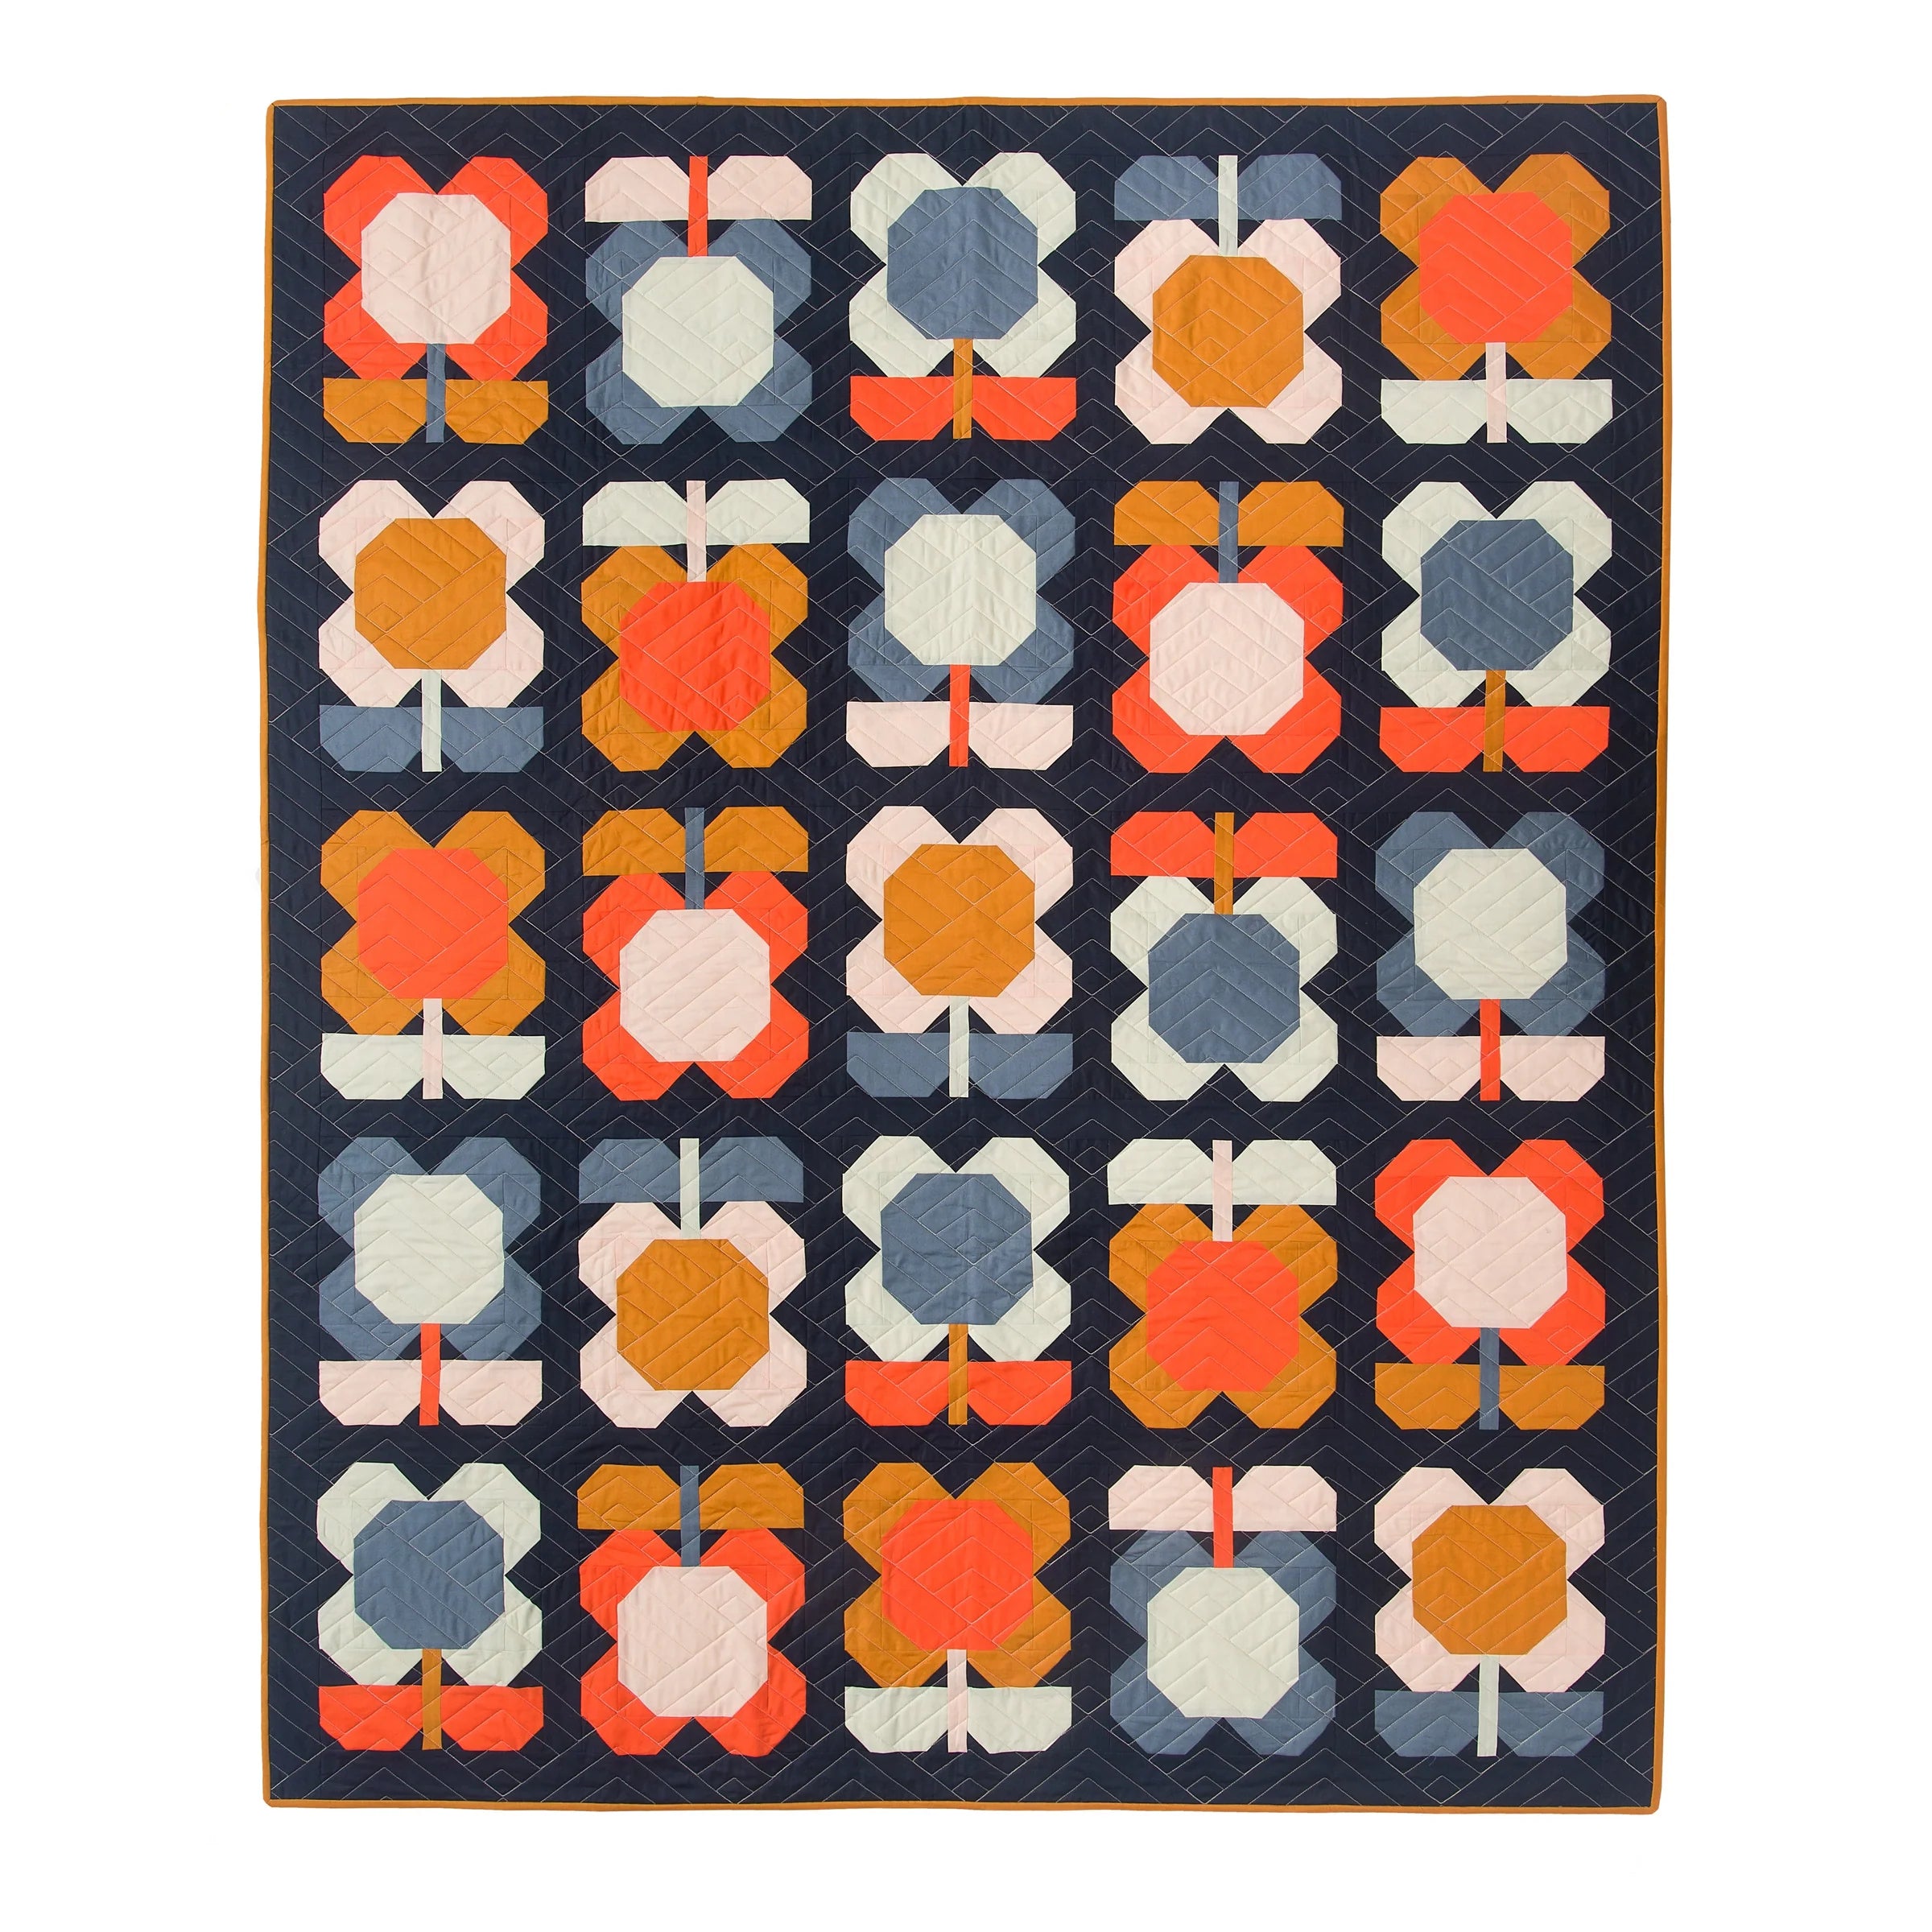 Folk Blooms Quilt Paper Pattern - Pen &amp; Paper Patterns